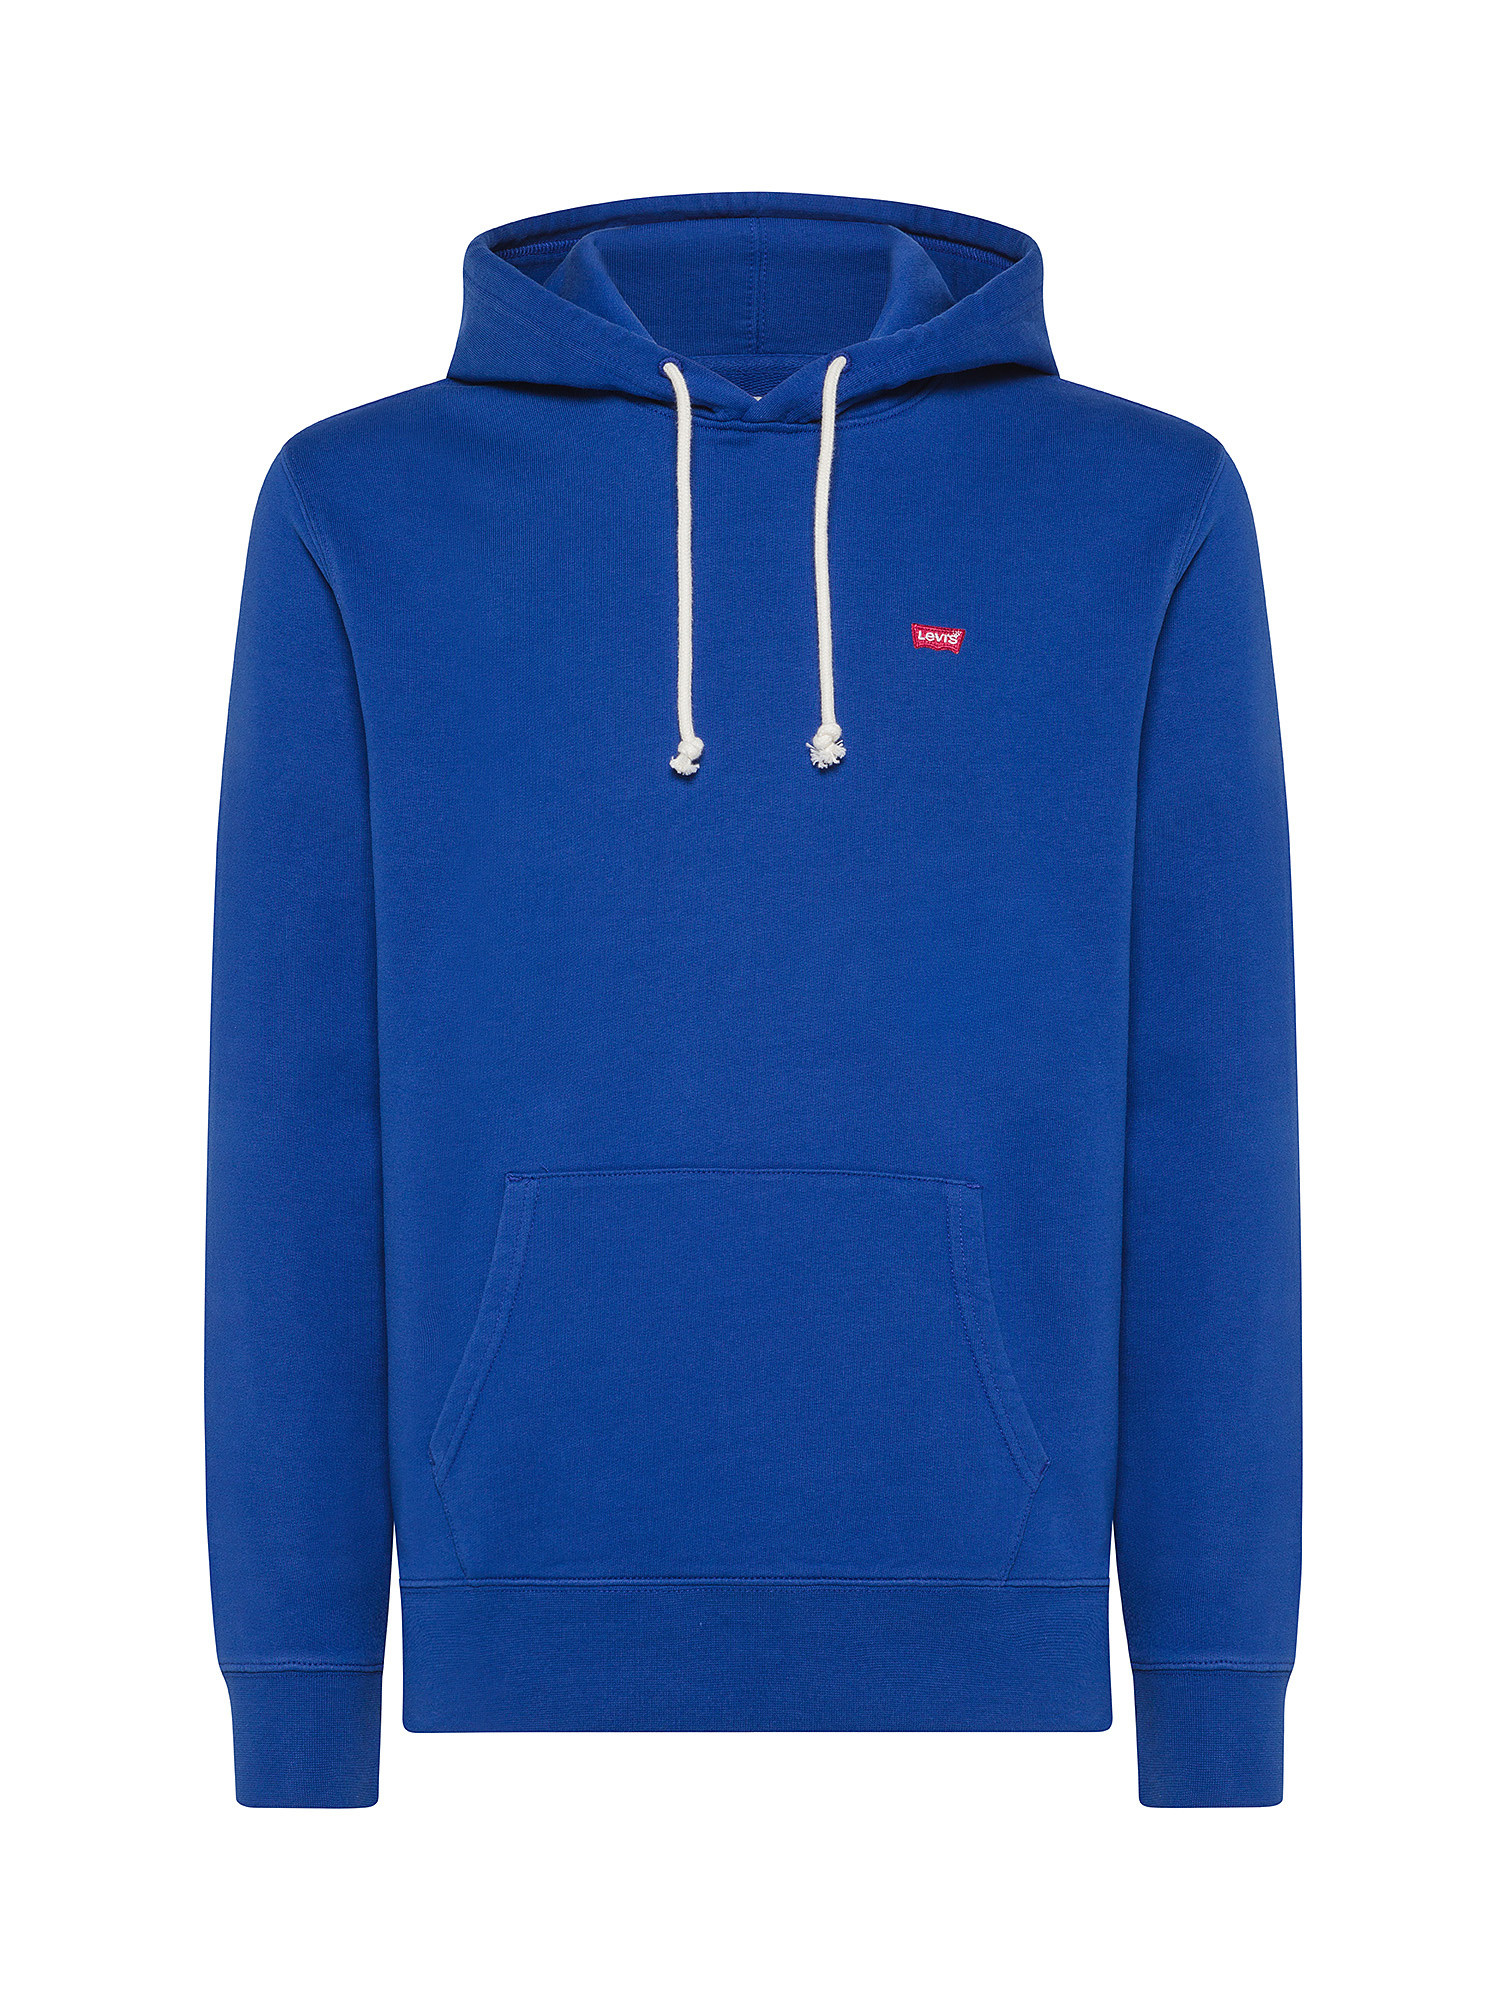 Levi's - Cotton hooded sweatshirt, Royal Blue, large image number 0